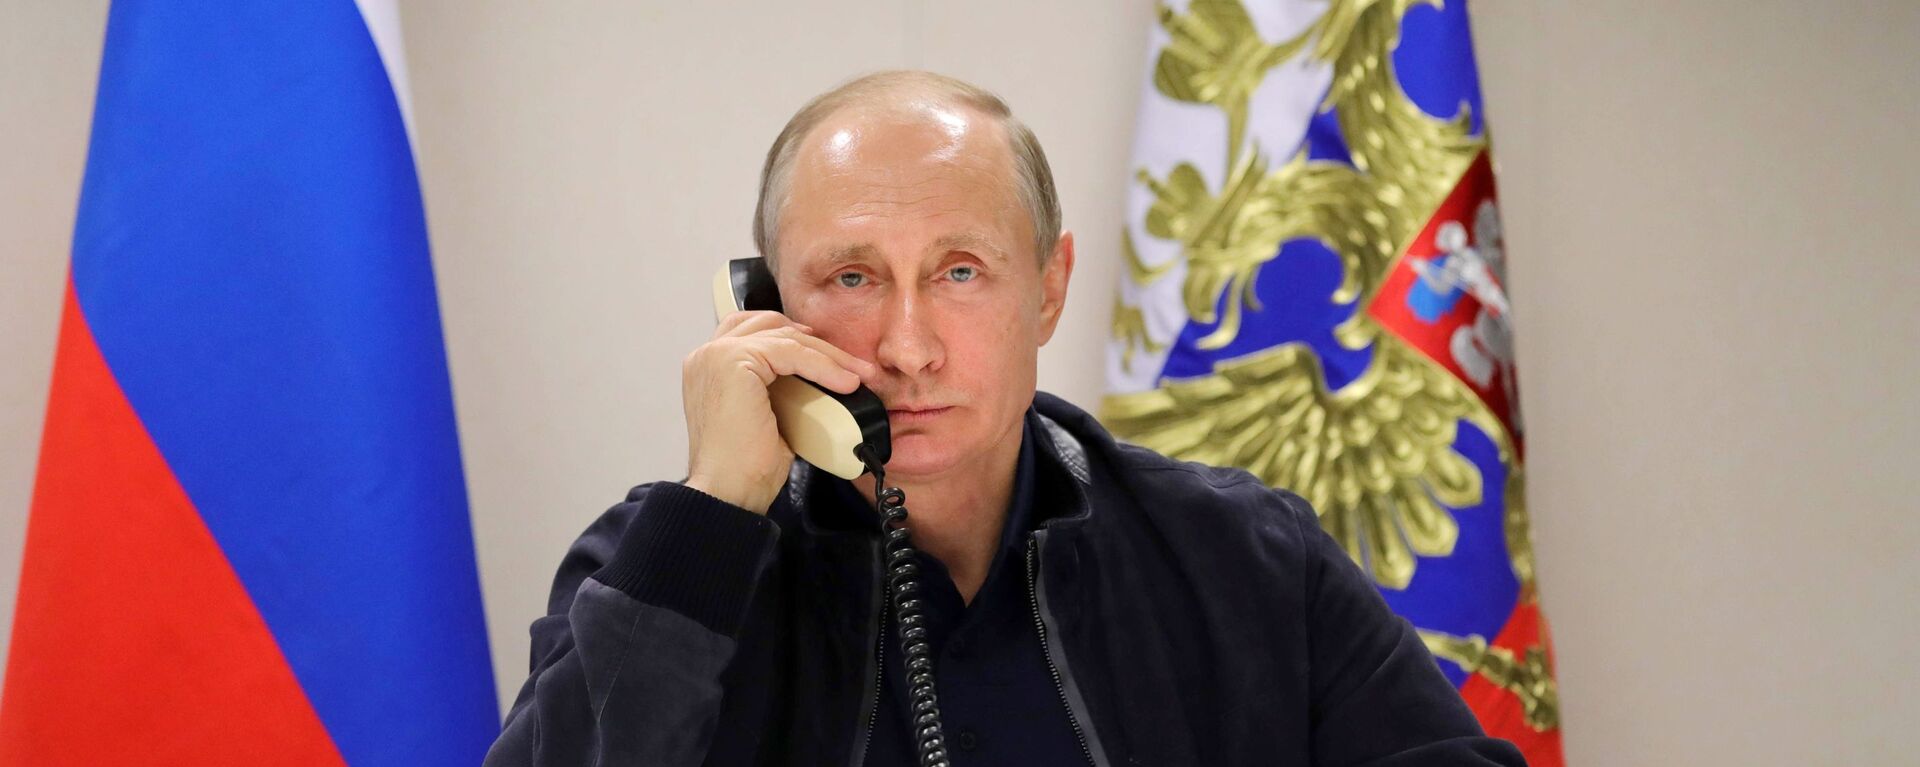 Predsednik Rusije Vladimir Putin tokom telefonskog razgovora sa predsednikom Turske Redžepom Tajipom Erdoganom  - Sputnik Srbija, 1920, 06.04.2021